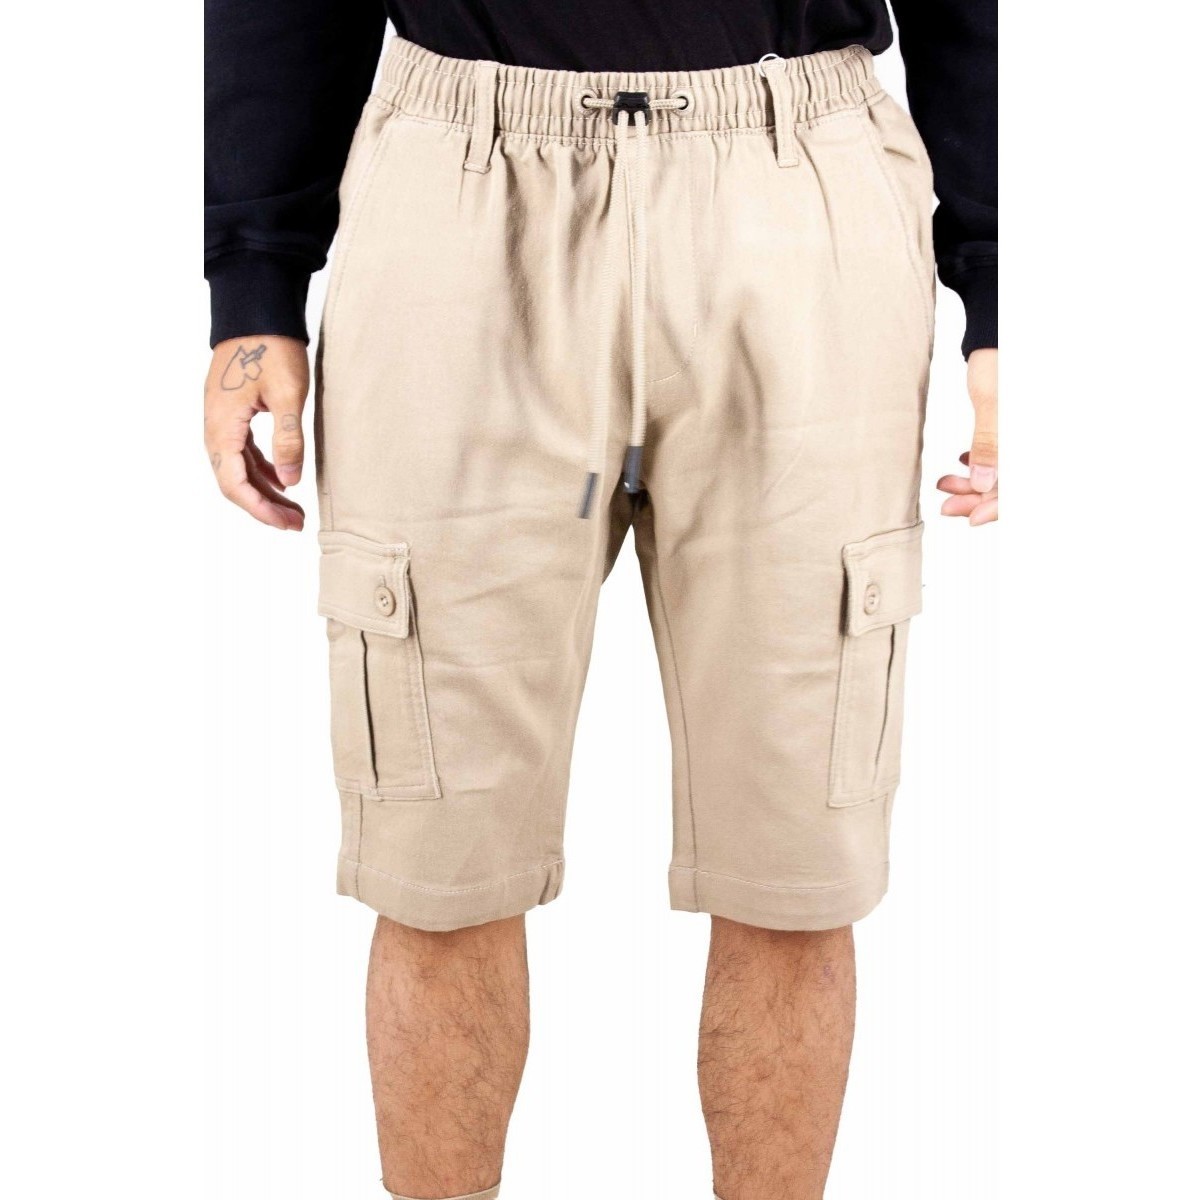 Vêtements Homme Shorts / Bermudas Billtornade Teka Beige